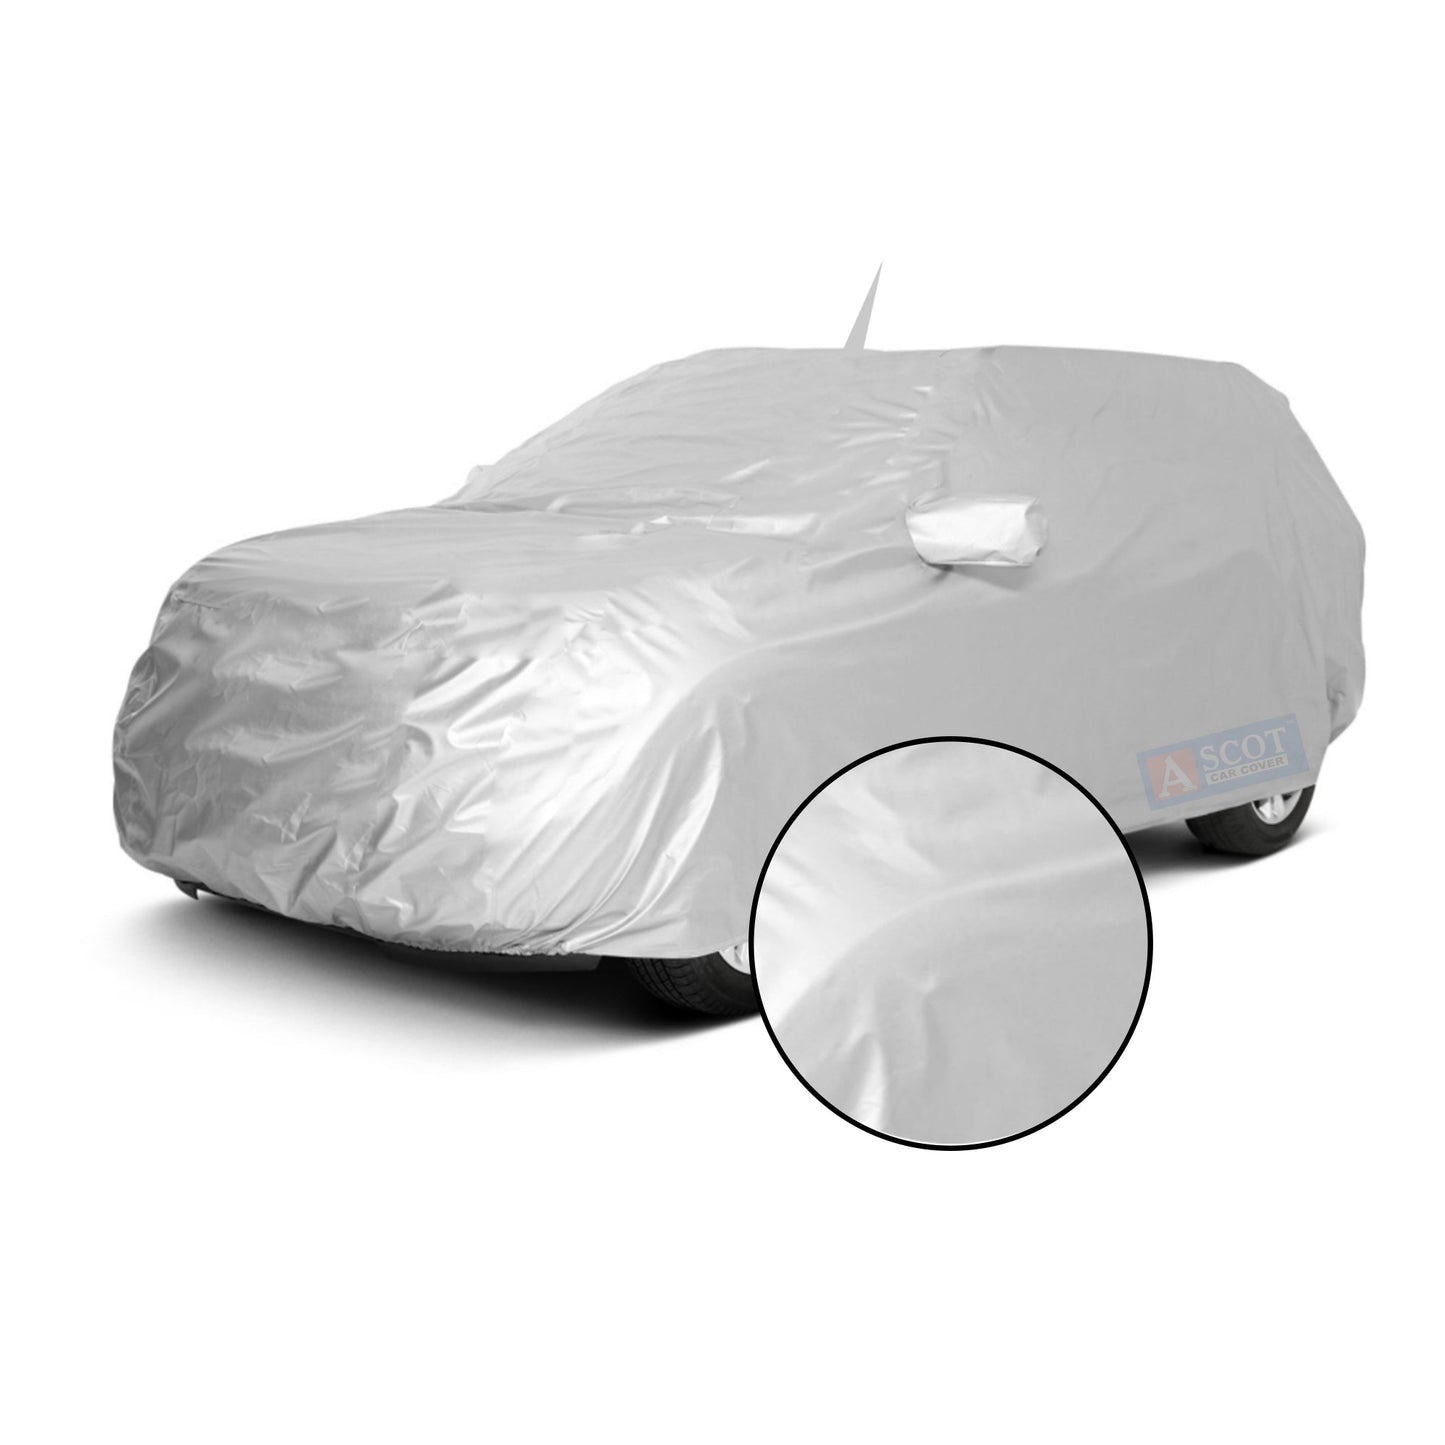 Ascot Tata Nexon EV / Nexon EV Facelift Car Body Cover Dust Proof, Trippel Stitched